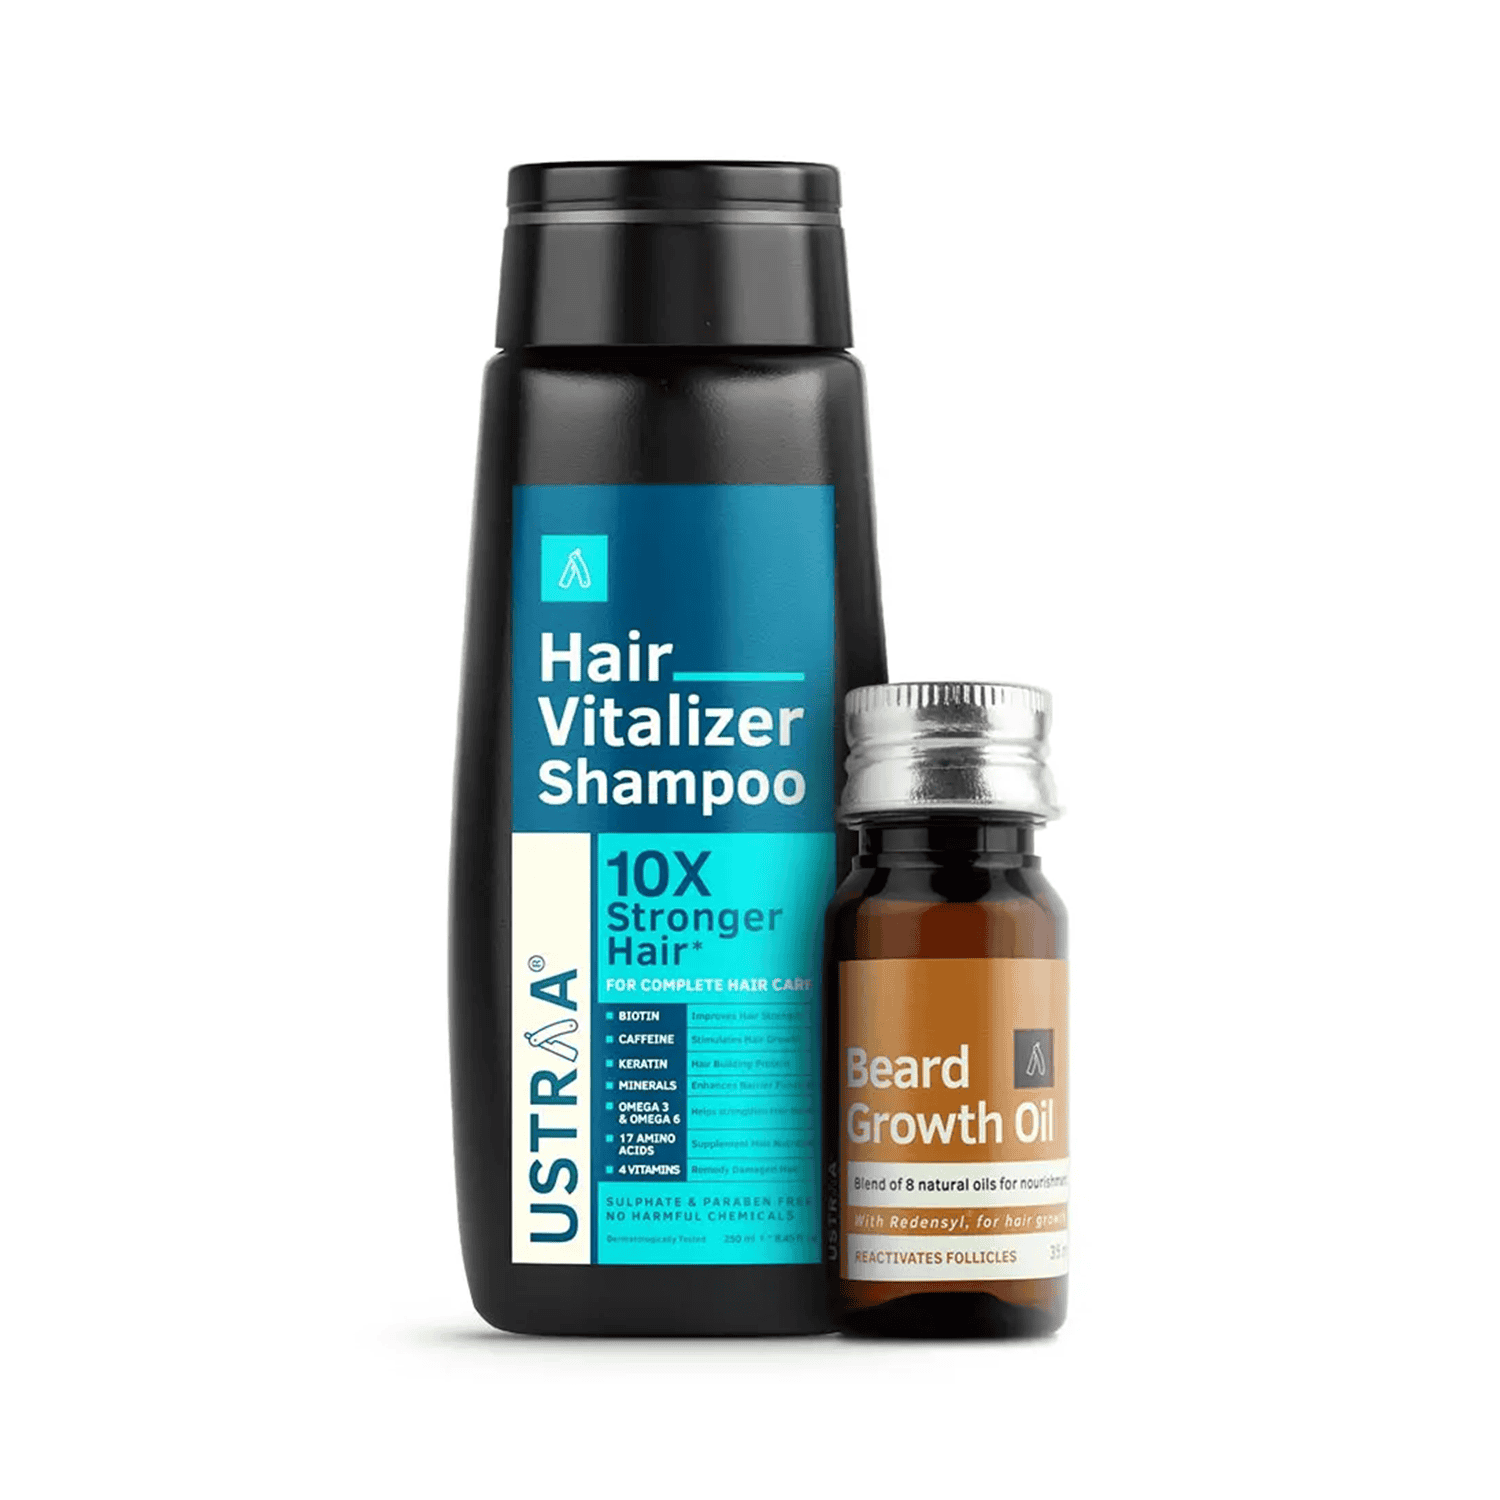 Ustraa | Ustraa Hair Vitalizer Shampoo & Beard Growth Oil Combo